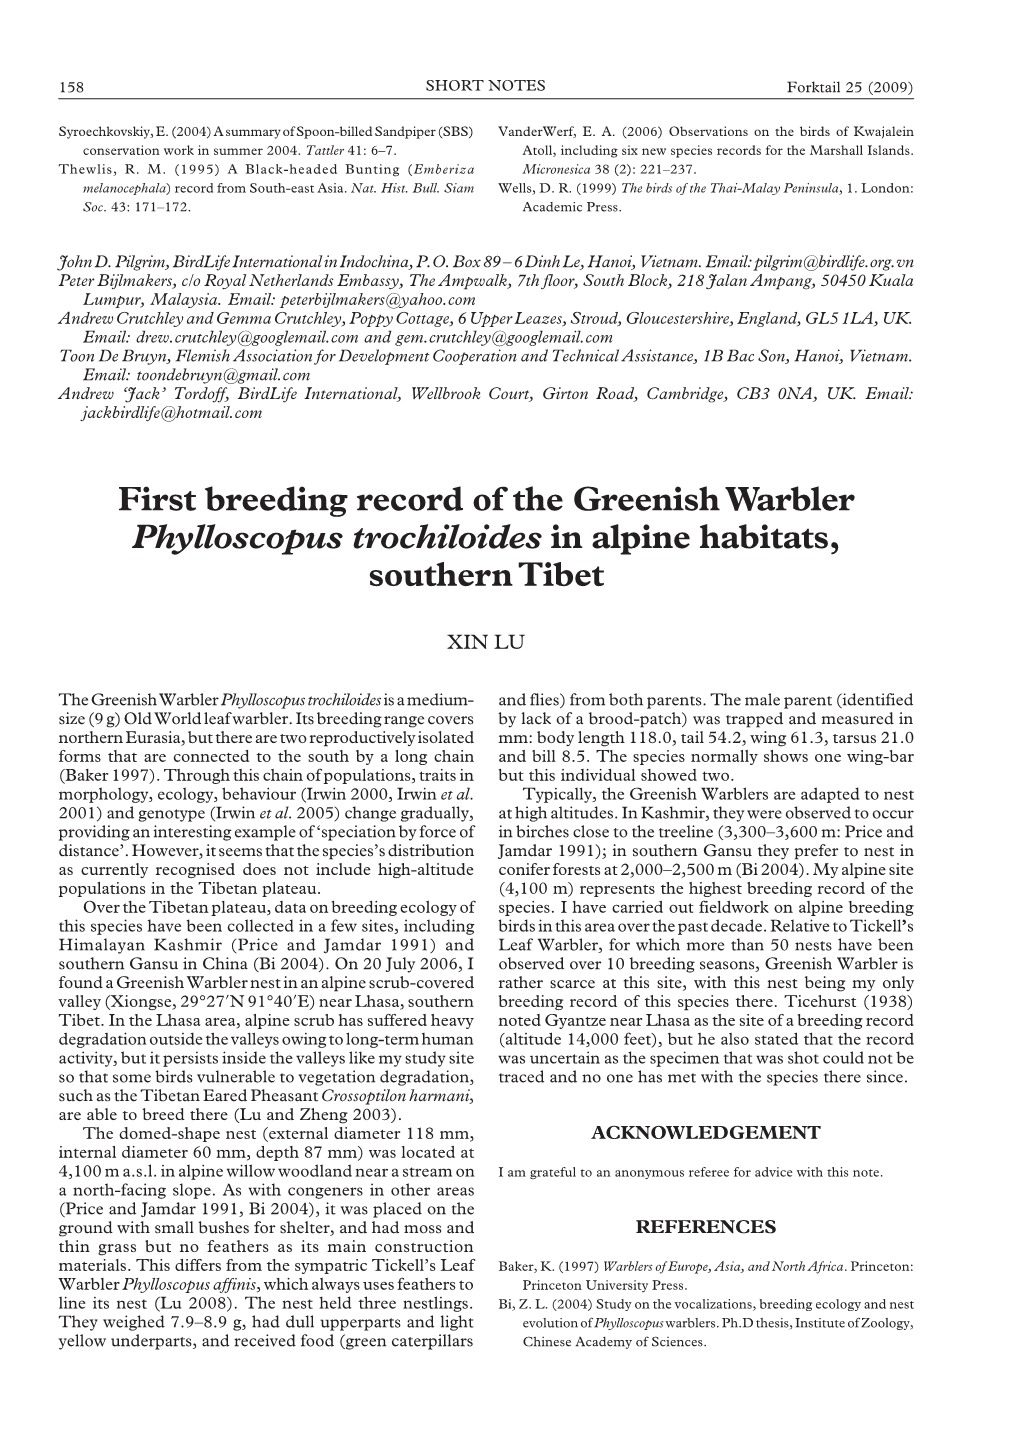 First Breeding Record of the Greenish Warbler Phylloscopus Trochiloides in Alpine Habitats, Southern Tibet